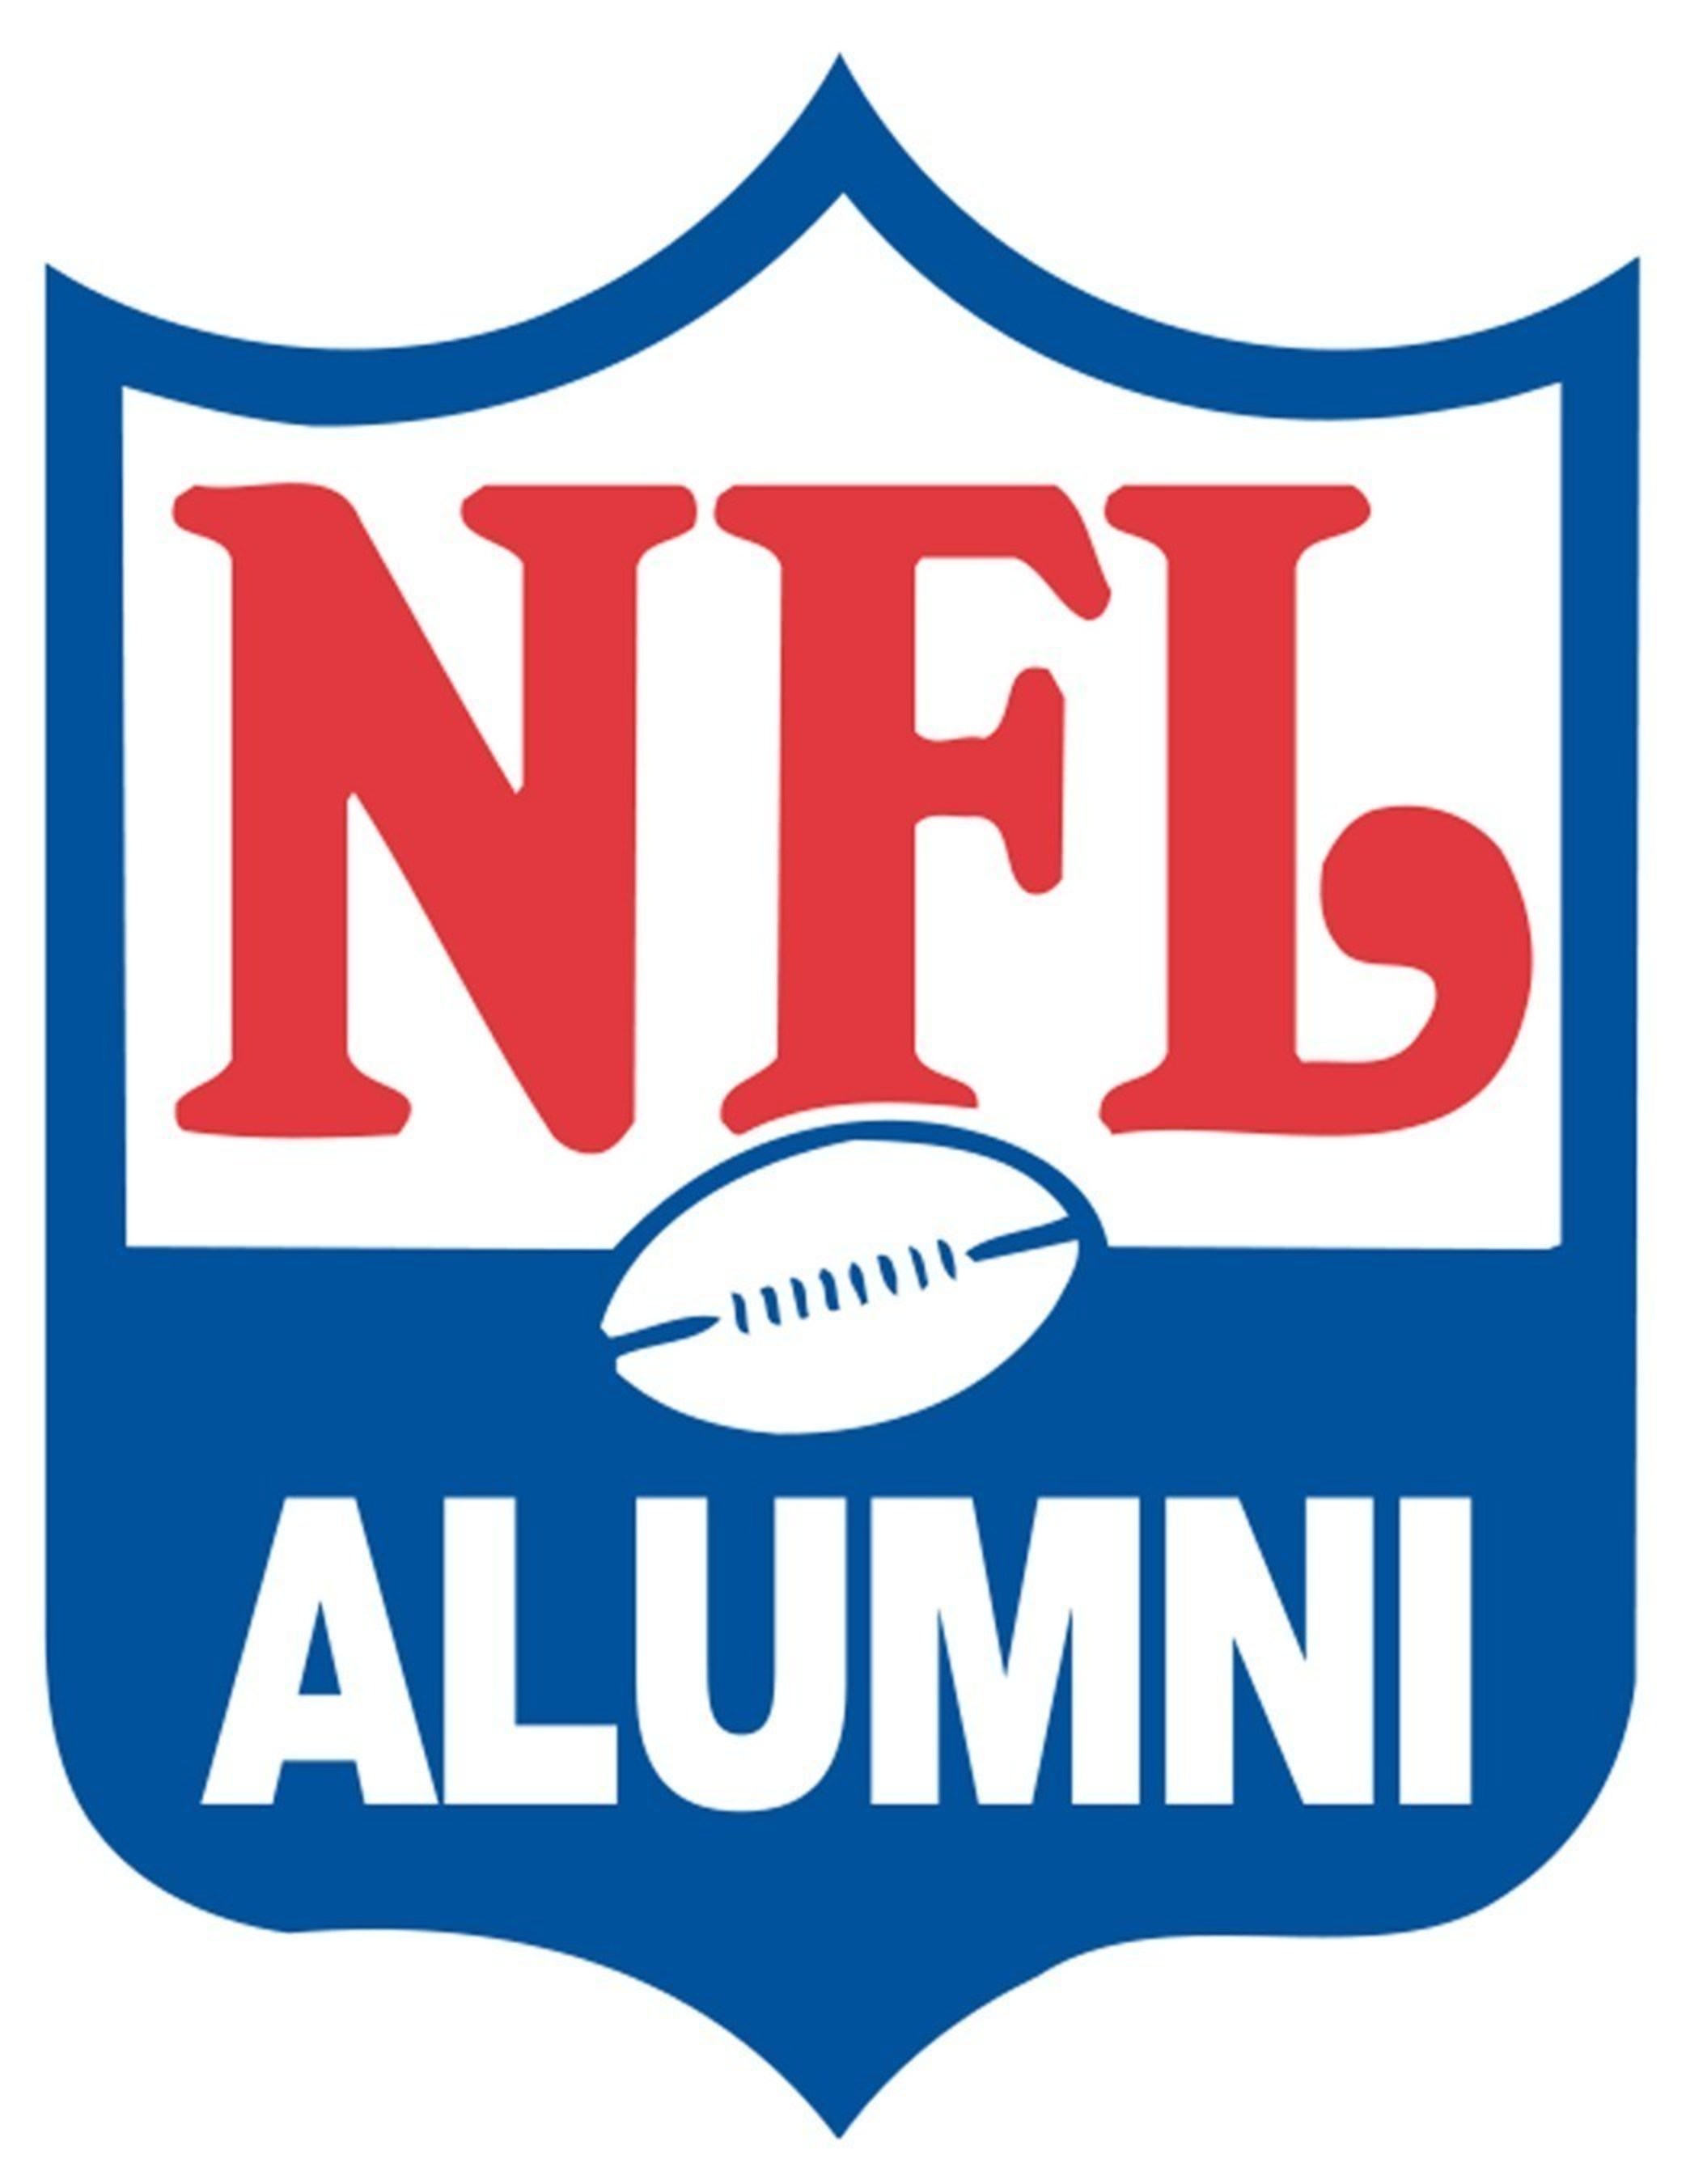 National Football League Alumni Association